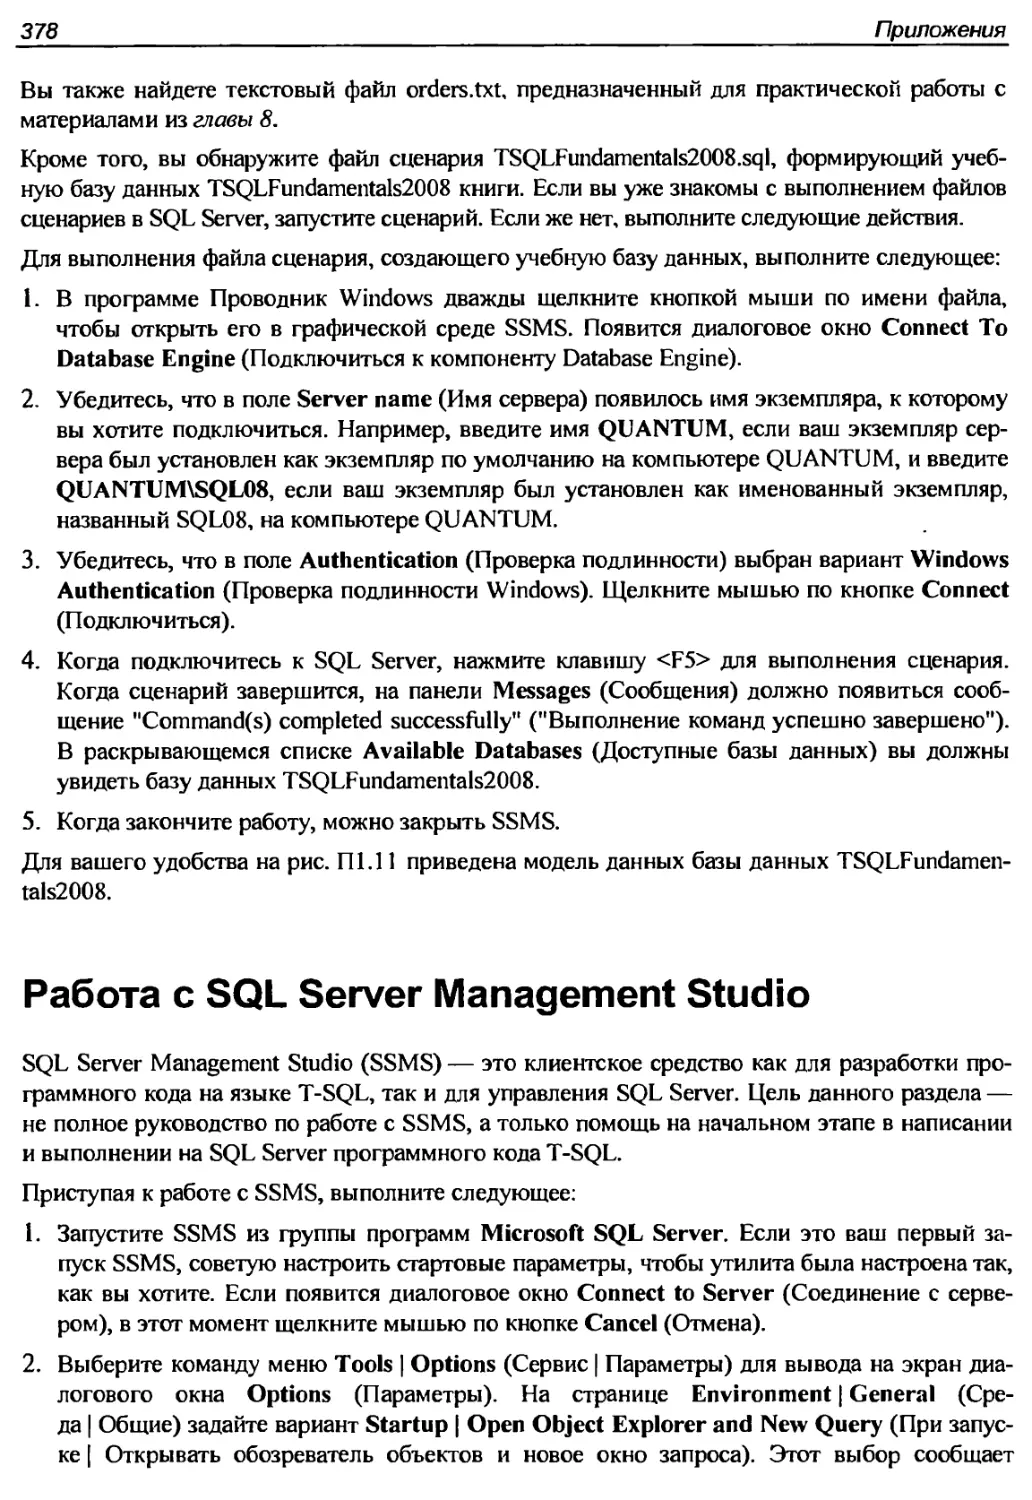 Работа с SQL Server Management Studio